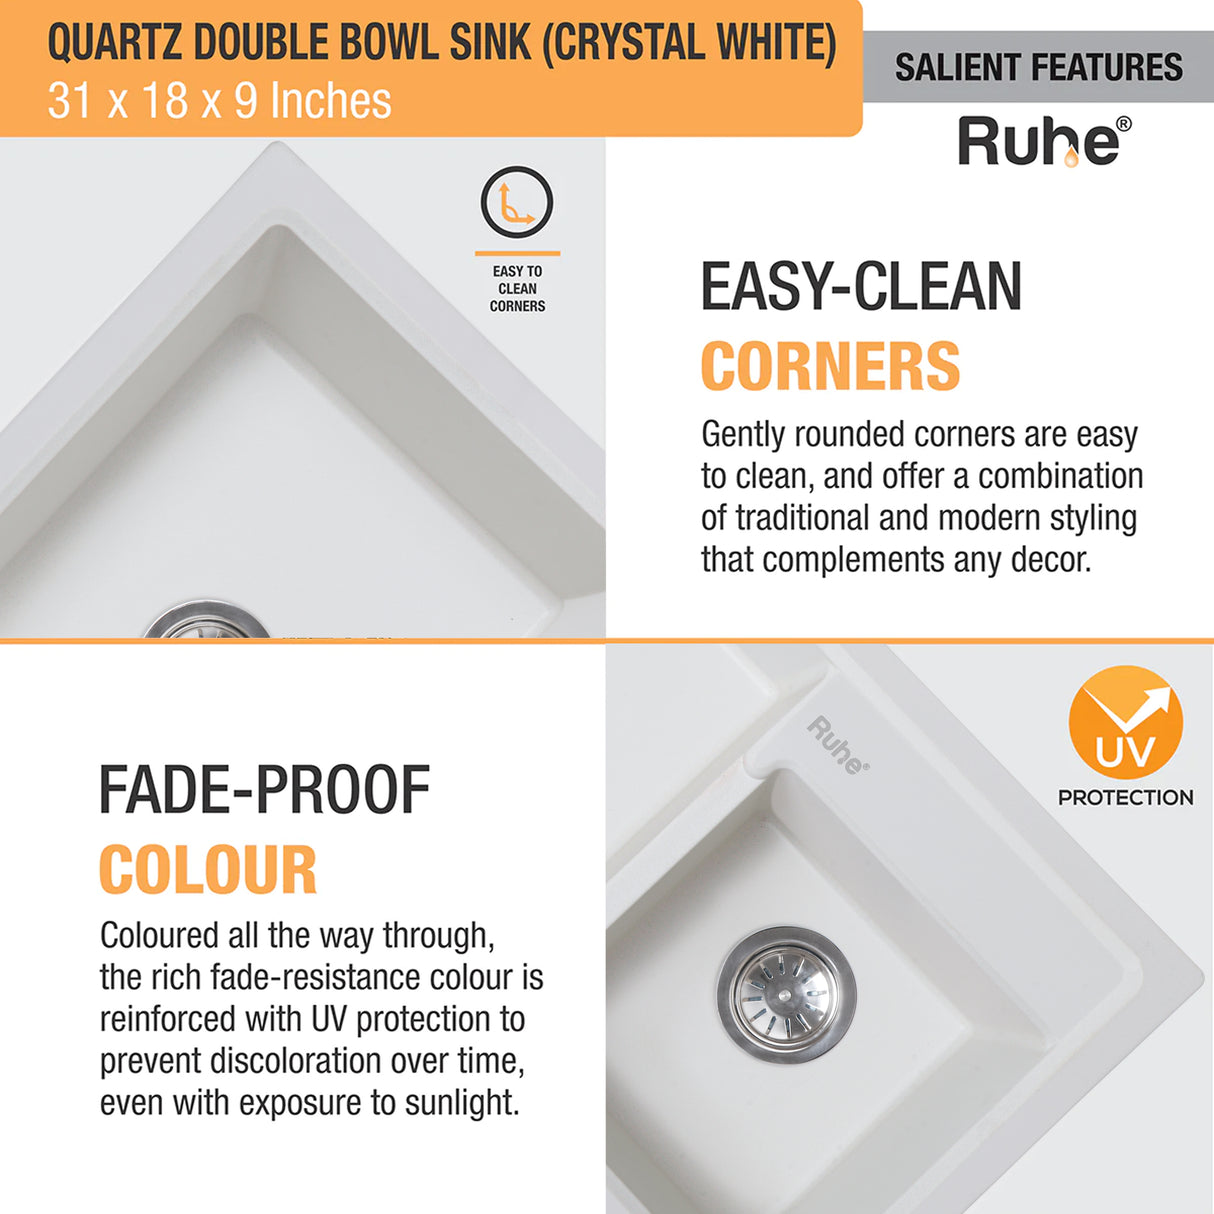 Quartz Double Bowl Kitchen Sink - Crystal White (31 x 18 x 9 inches) - by Ruhe®